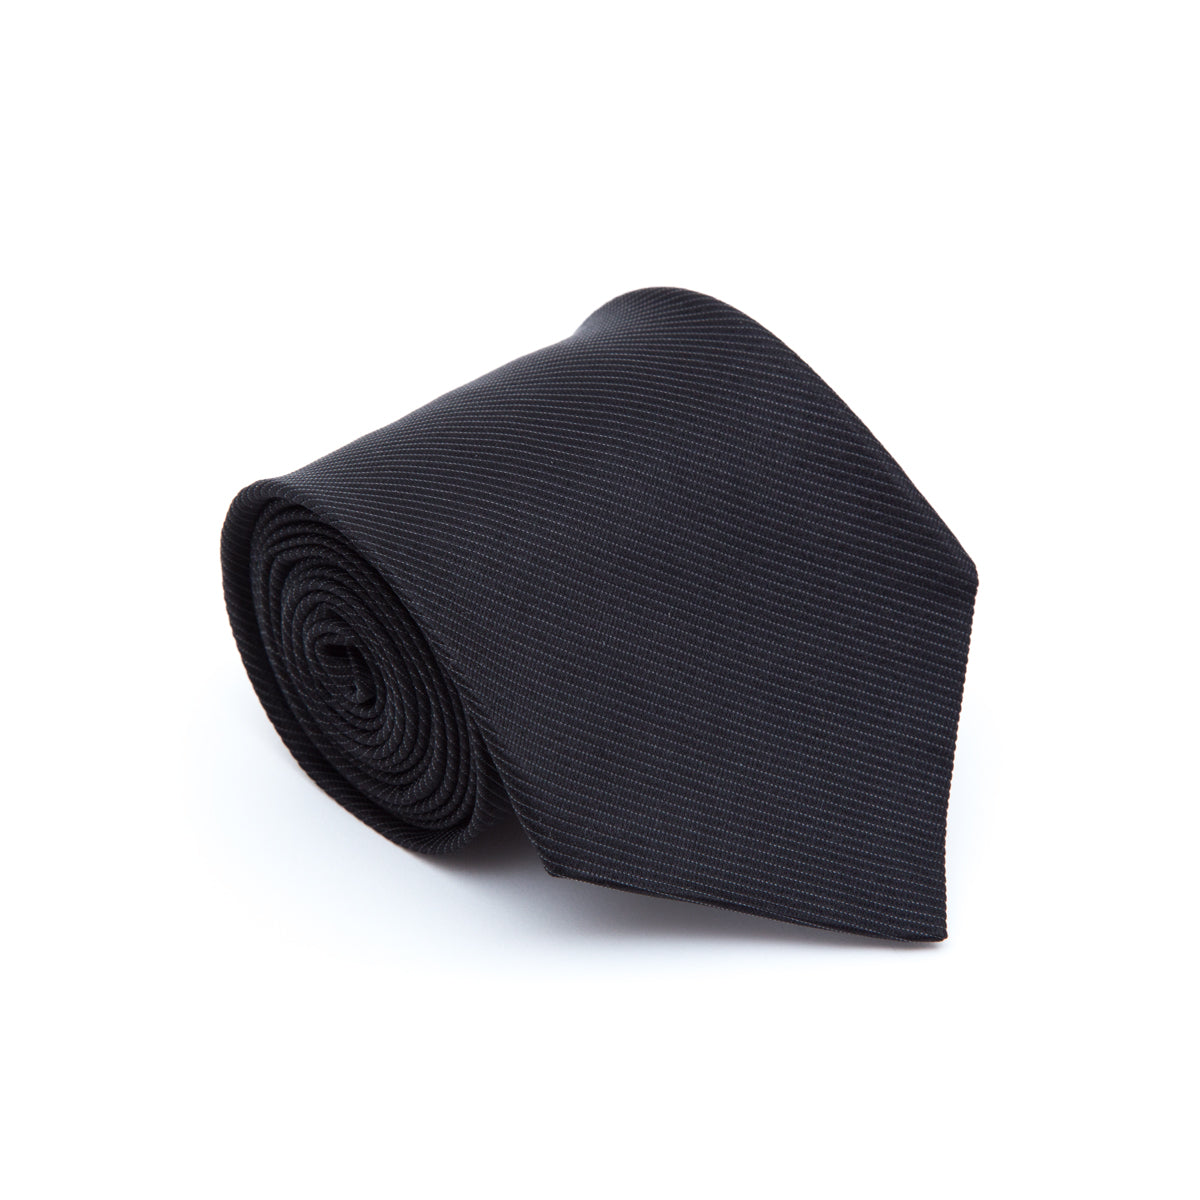 Black plain tie